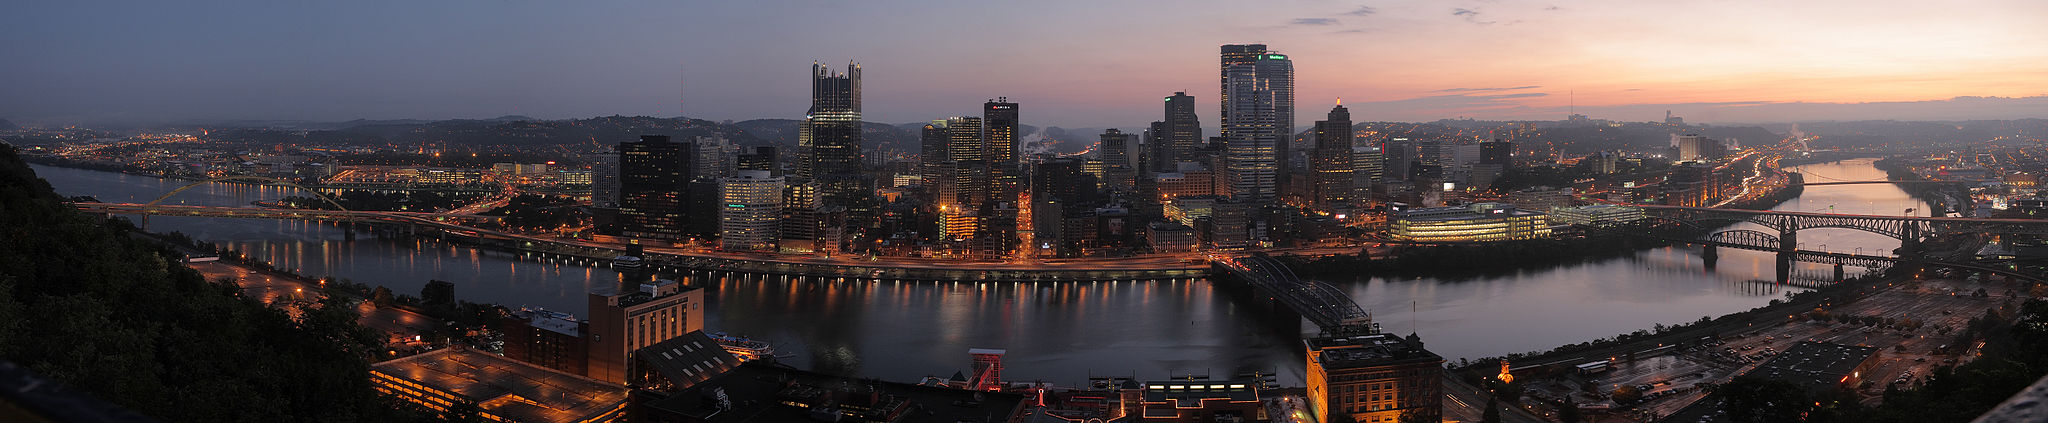 Pittsburgh at dawn